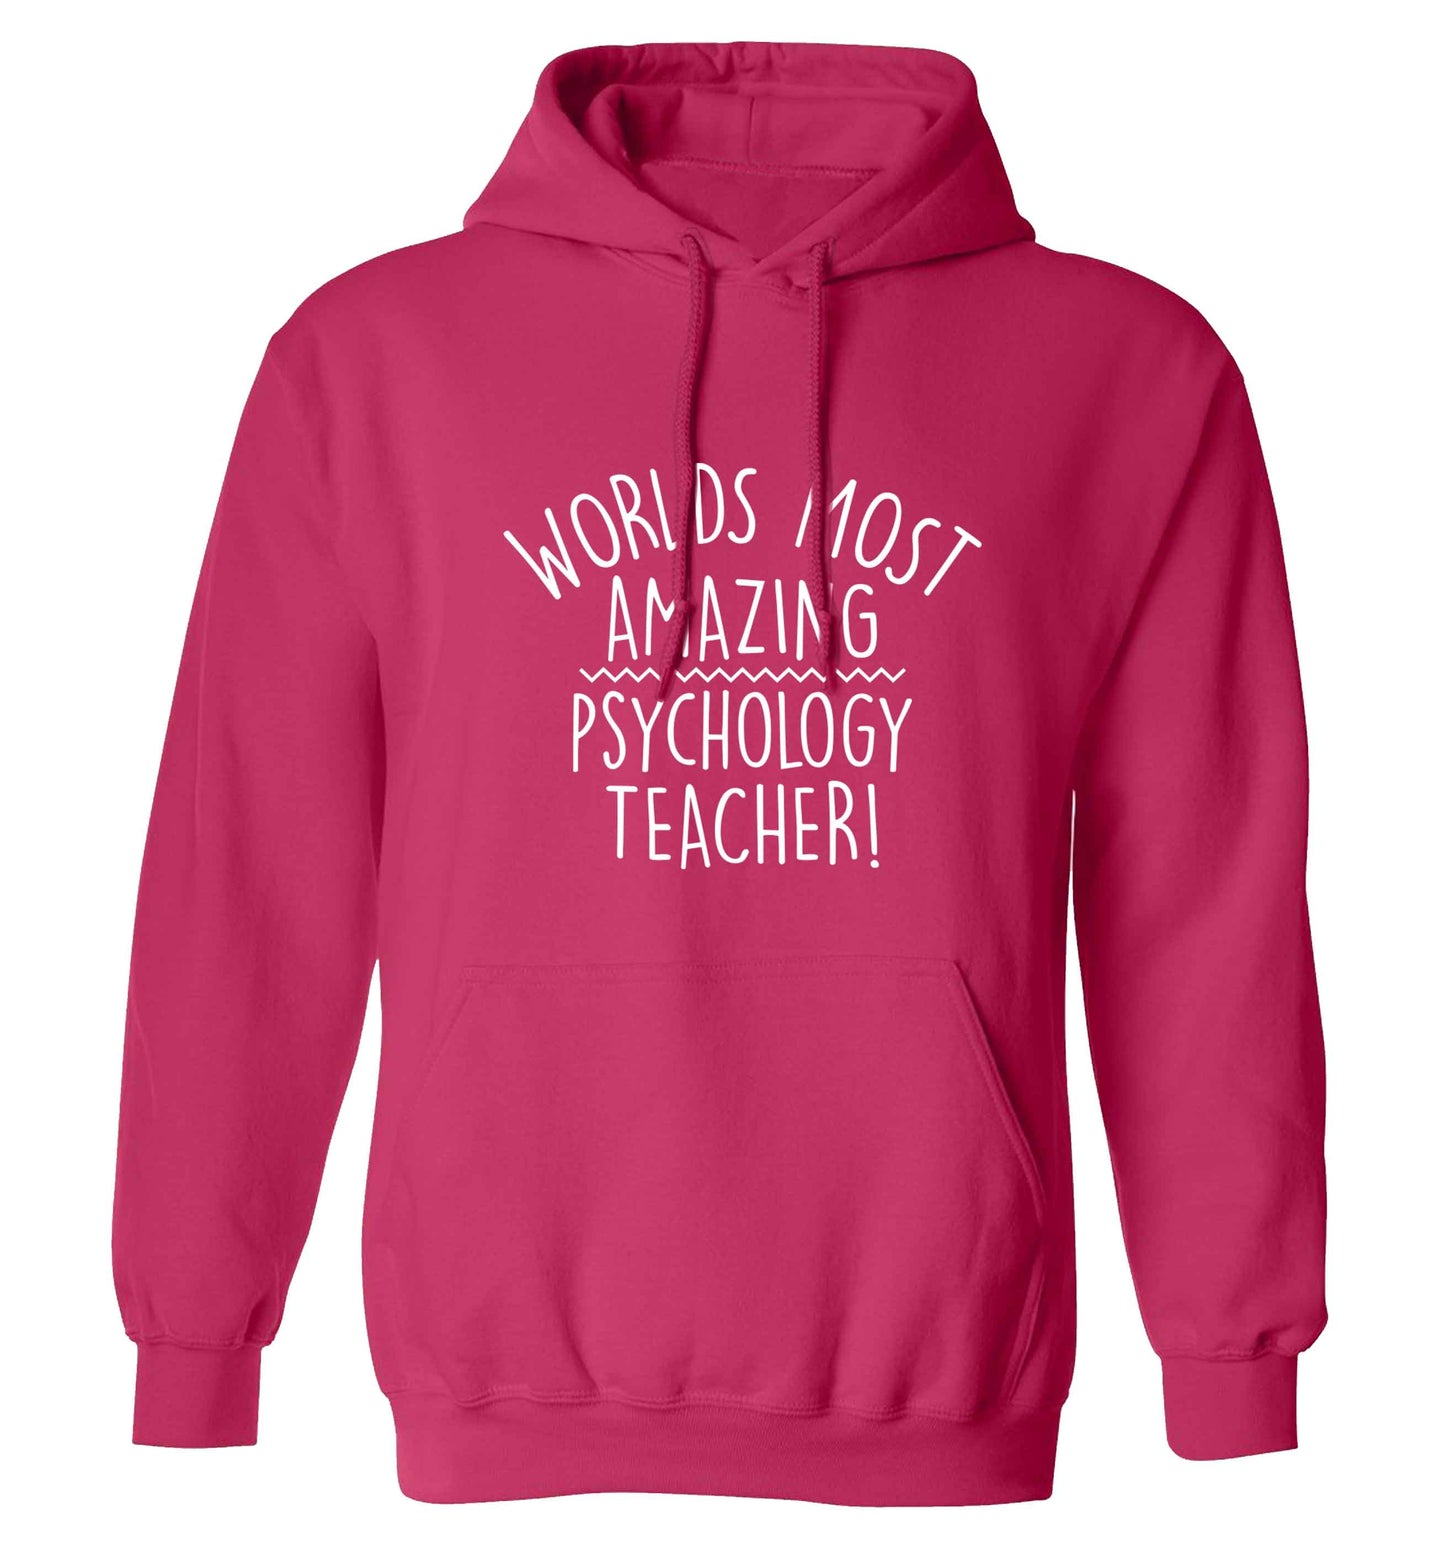 Worlds most amazing psychology teacher adults unisex pink hoodie 2XL